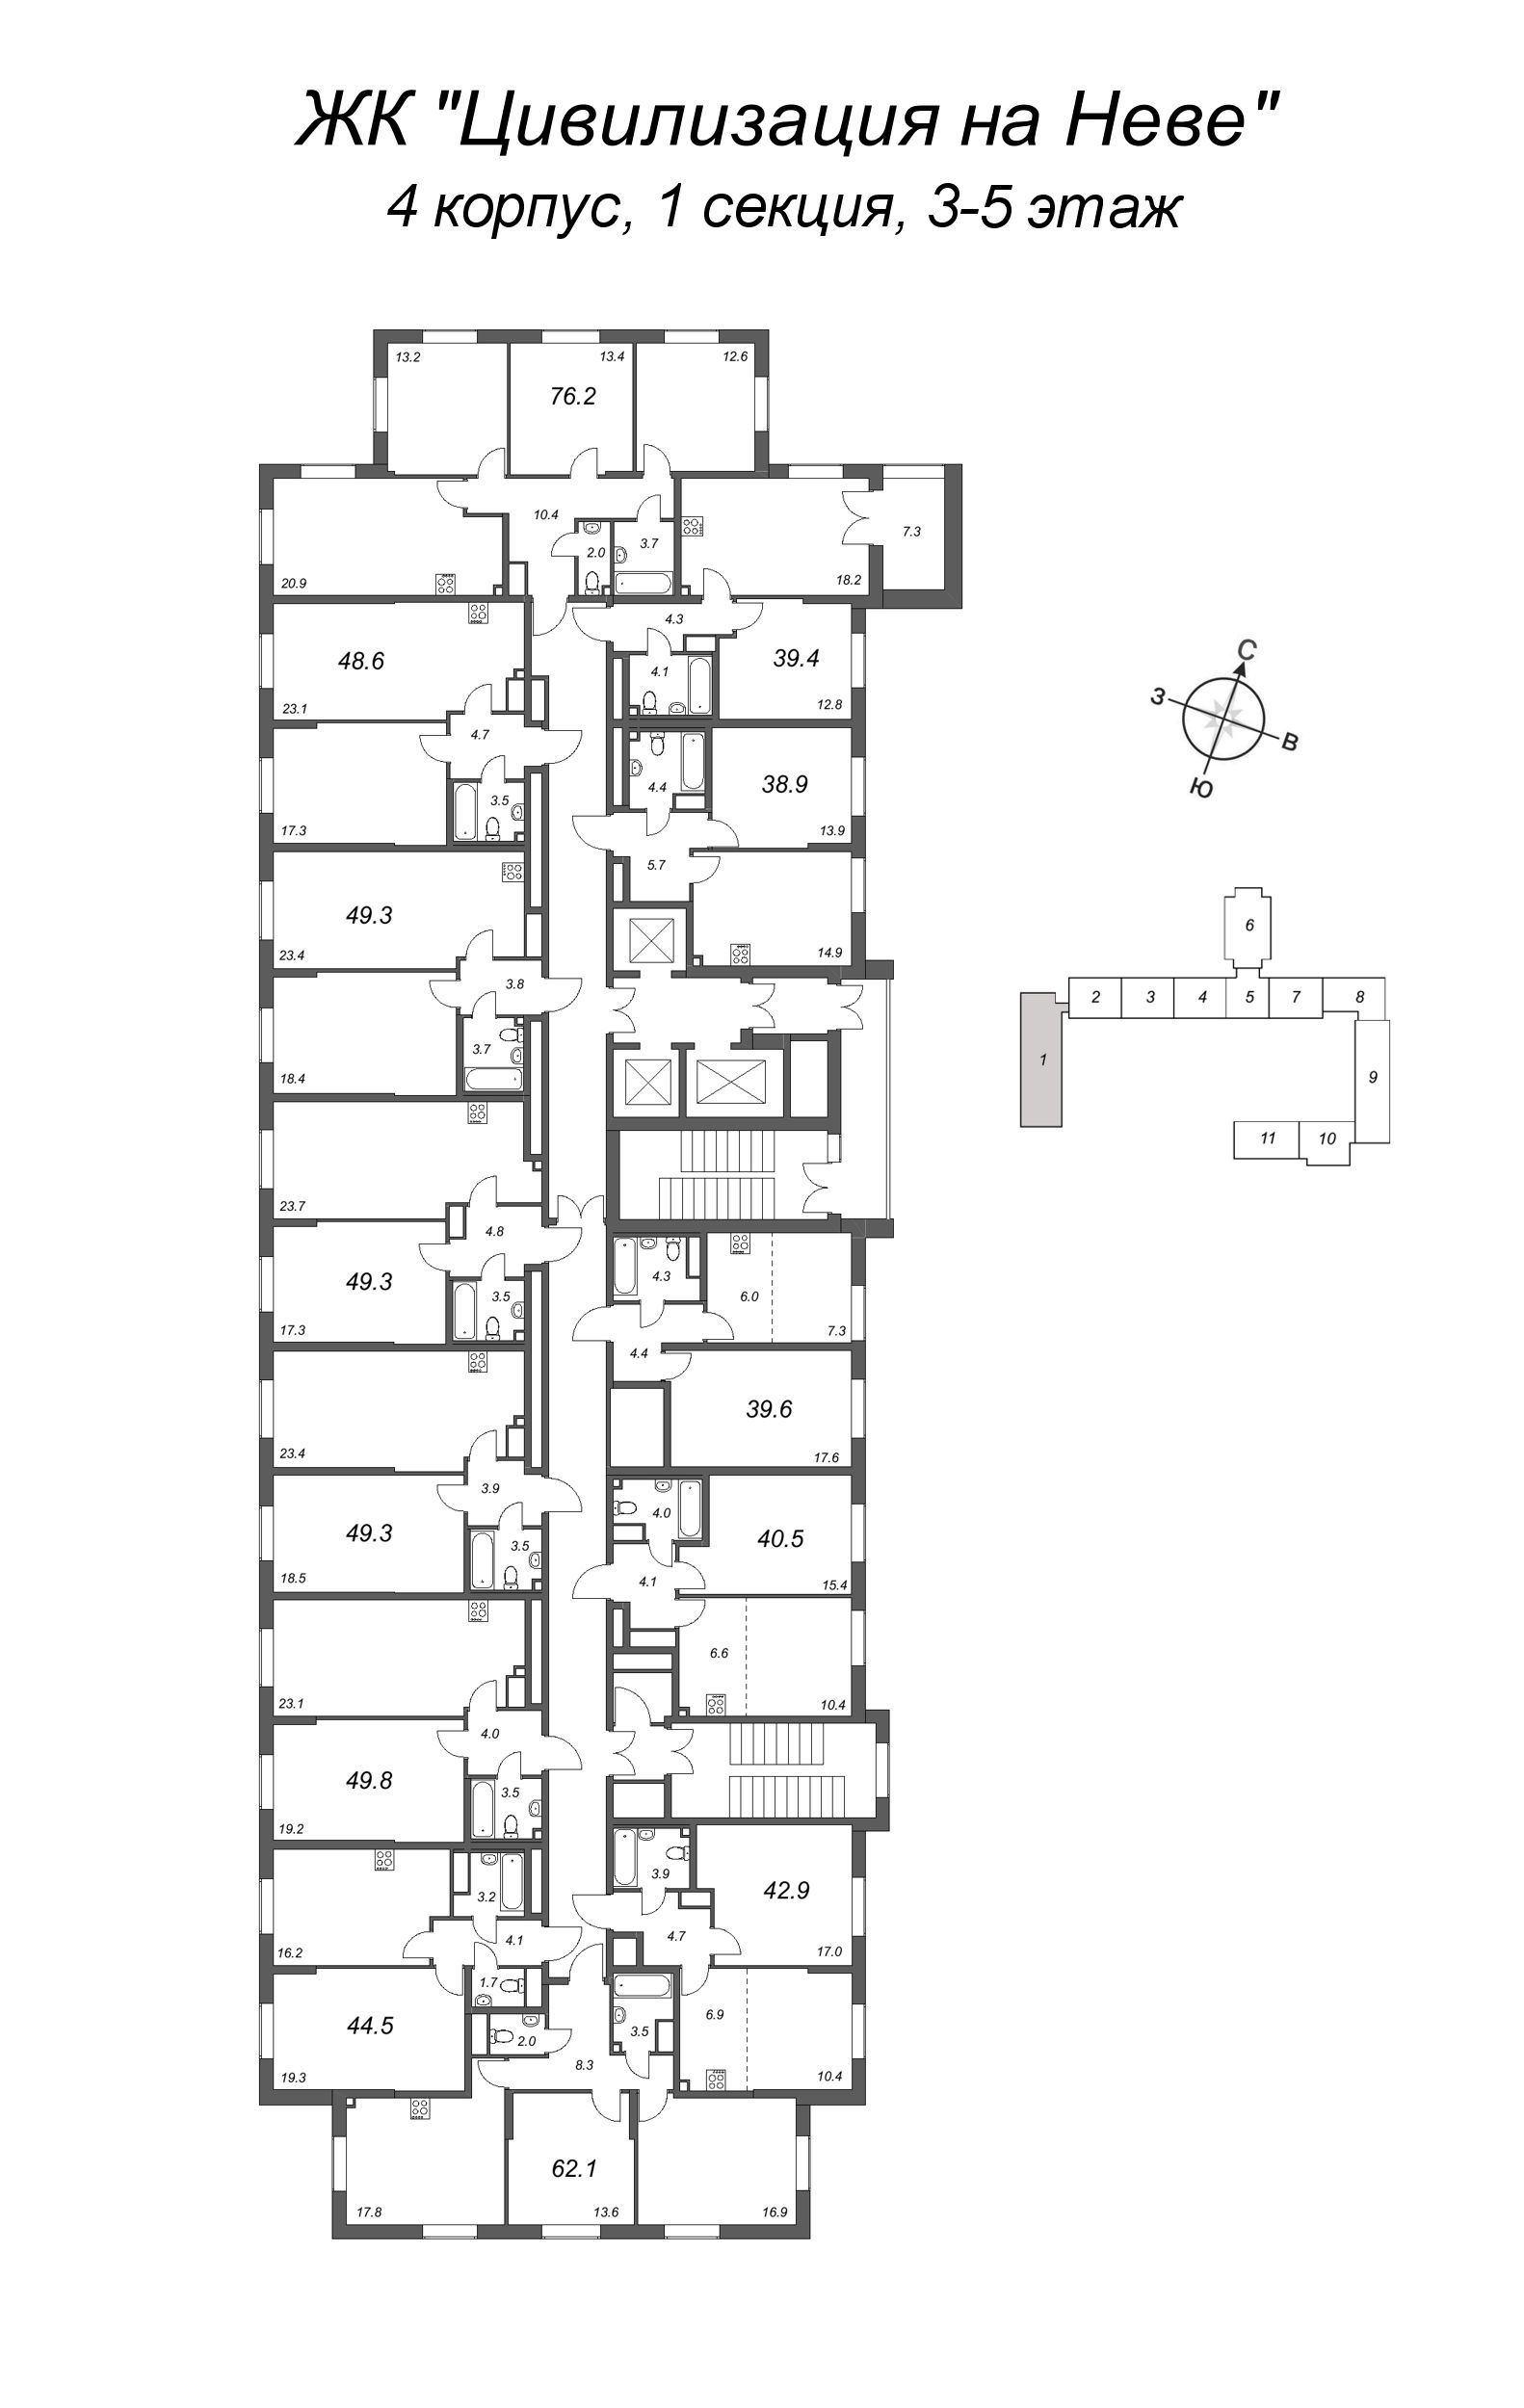 2-комнатная (Евро) квартира, 49.3 м² - планировка этажа